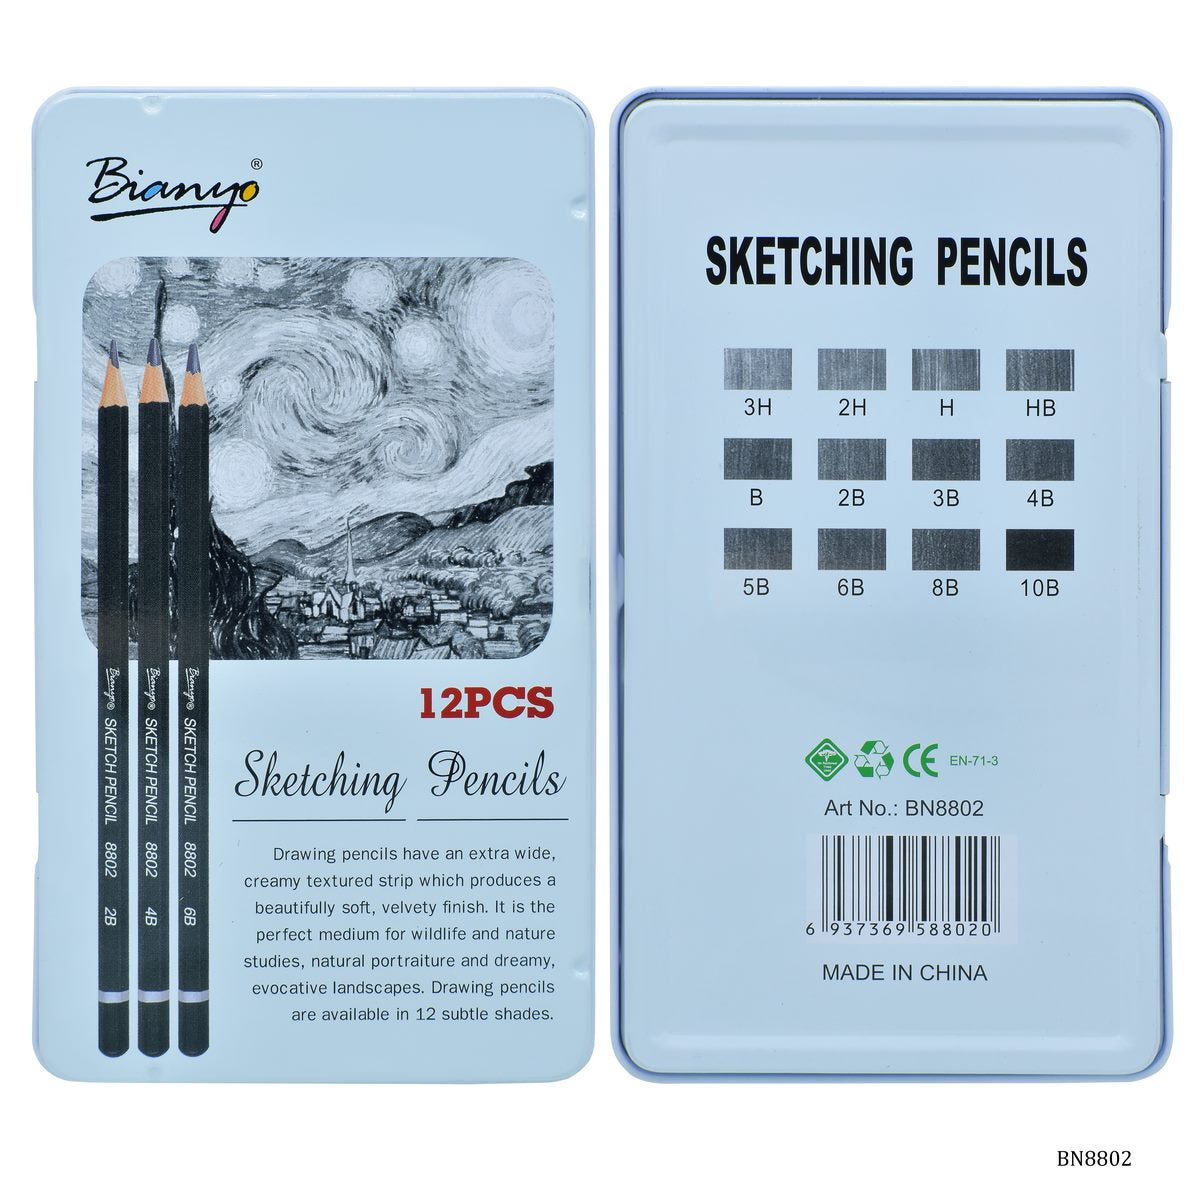 jags-mumbai Sketching Pencil Sketching Pencil 12 Pcs Set Matal Box